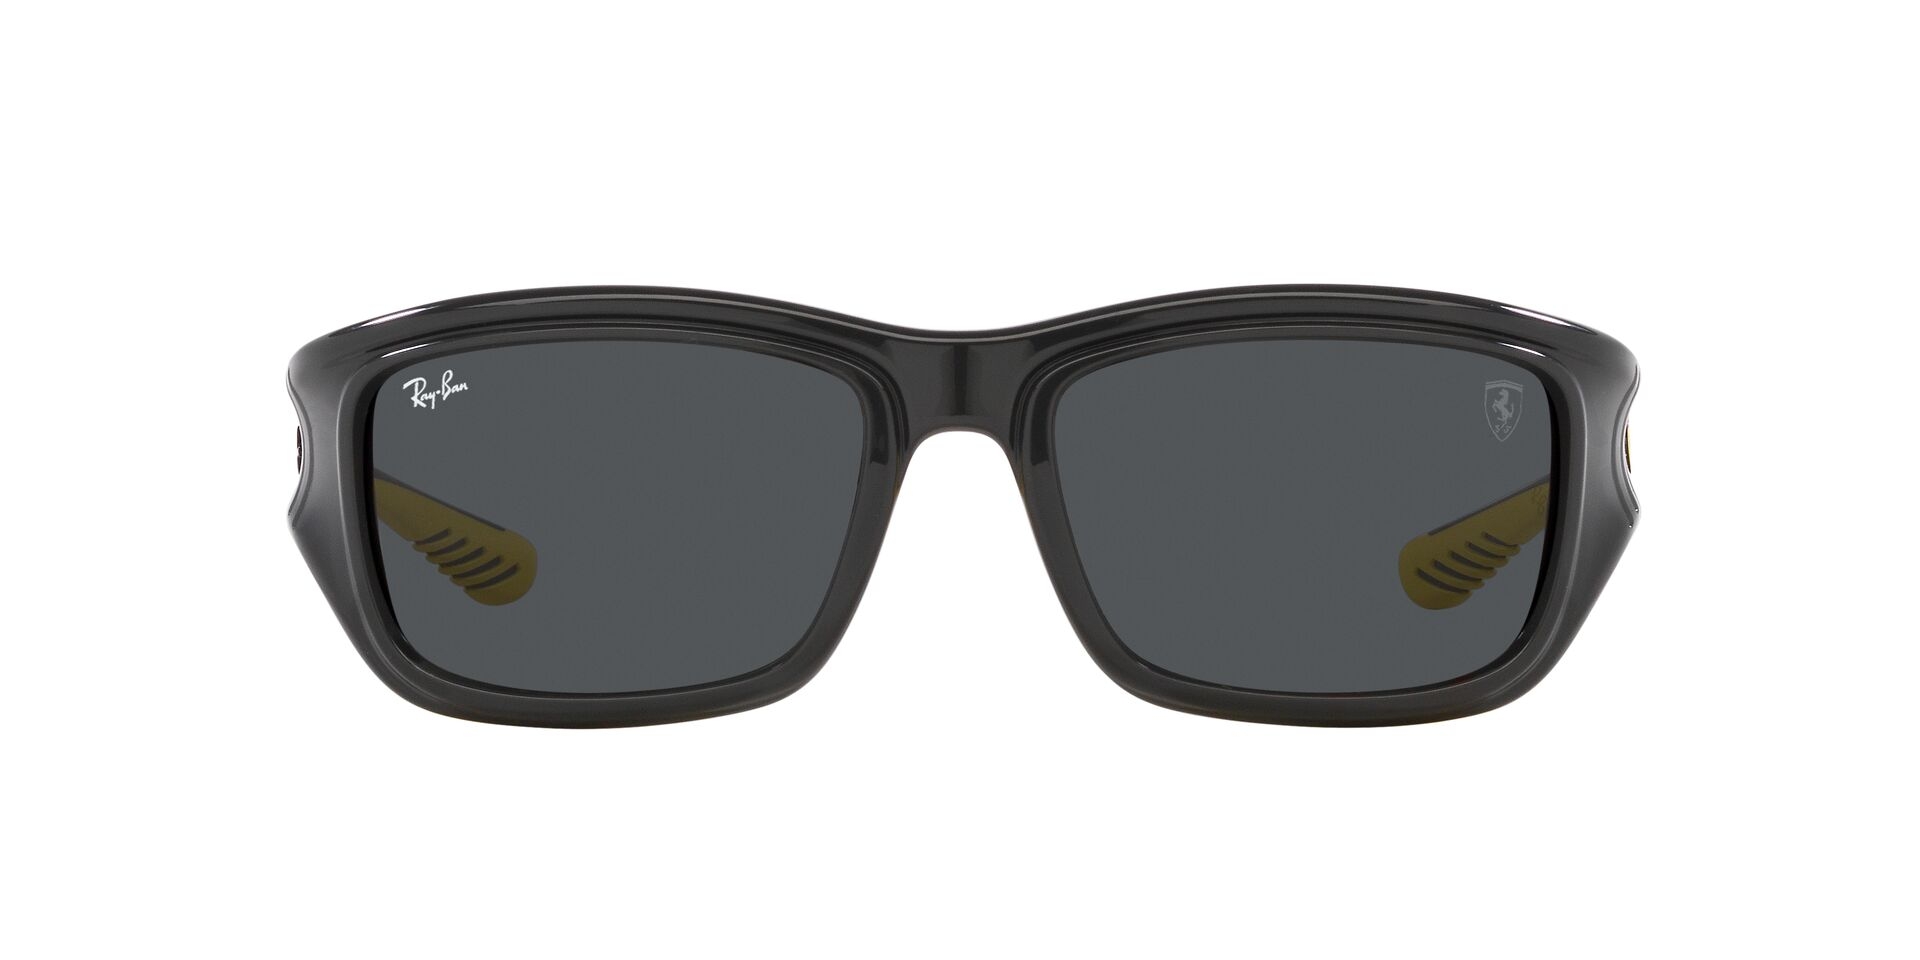 Buy Ray-Ban New Wayfarer Classic Sunglasses Online.